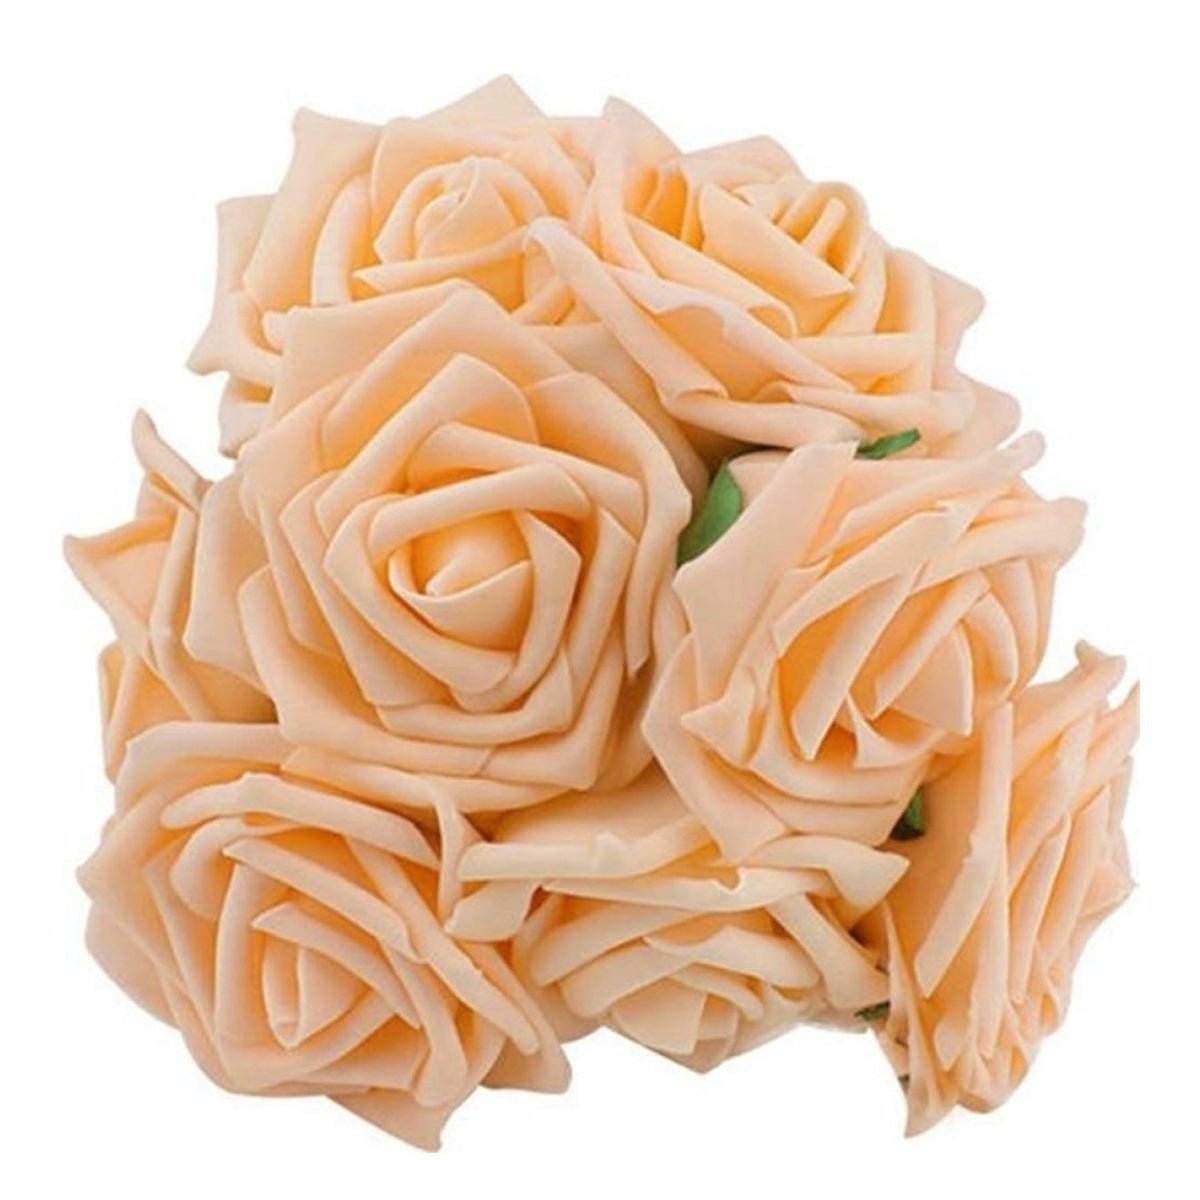 20pcs 7cm Artificial Flowers with Stems Foam Rose Fake Bride Bouquet Wedding - Peach/Orange 2 - - Asia Sell